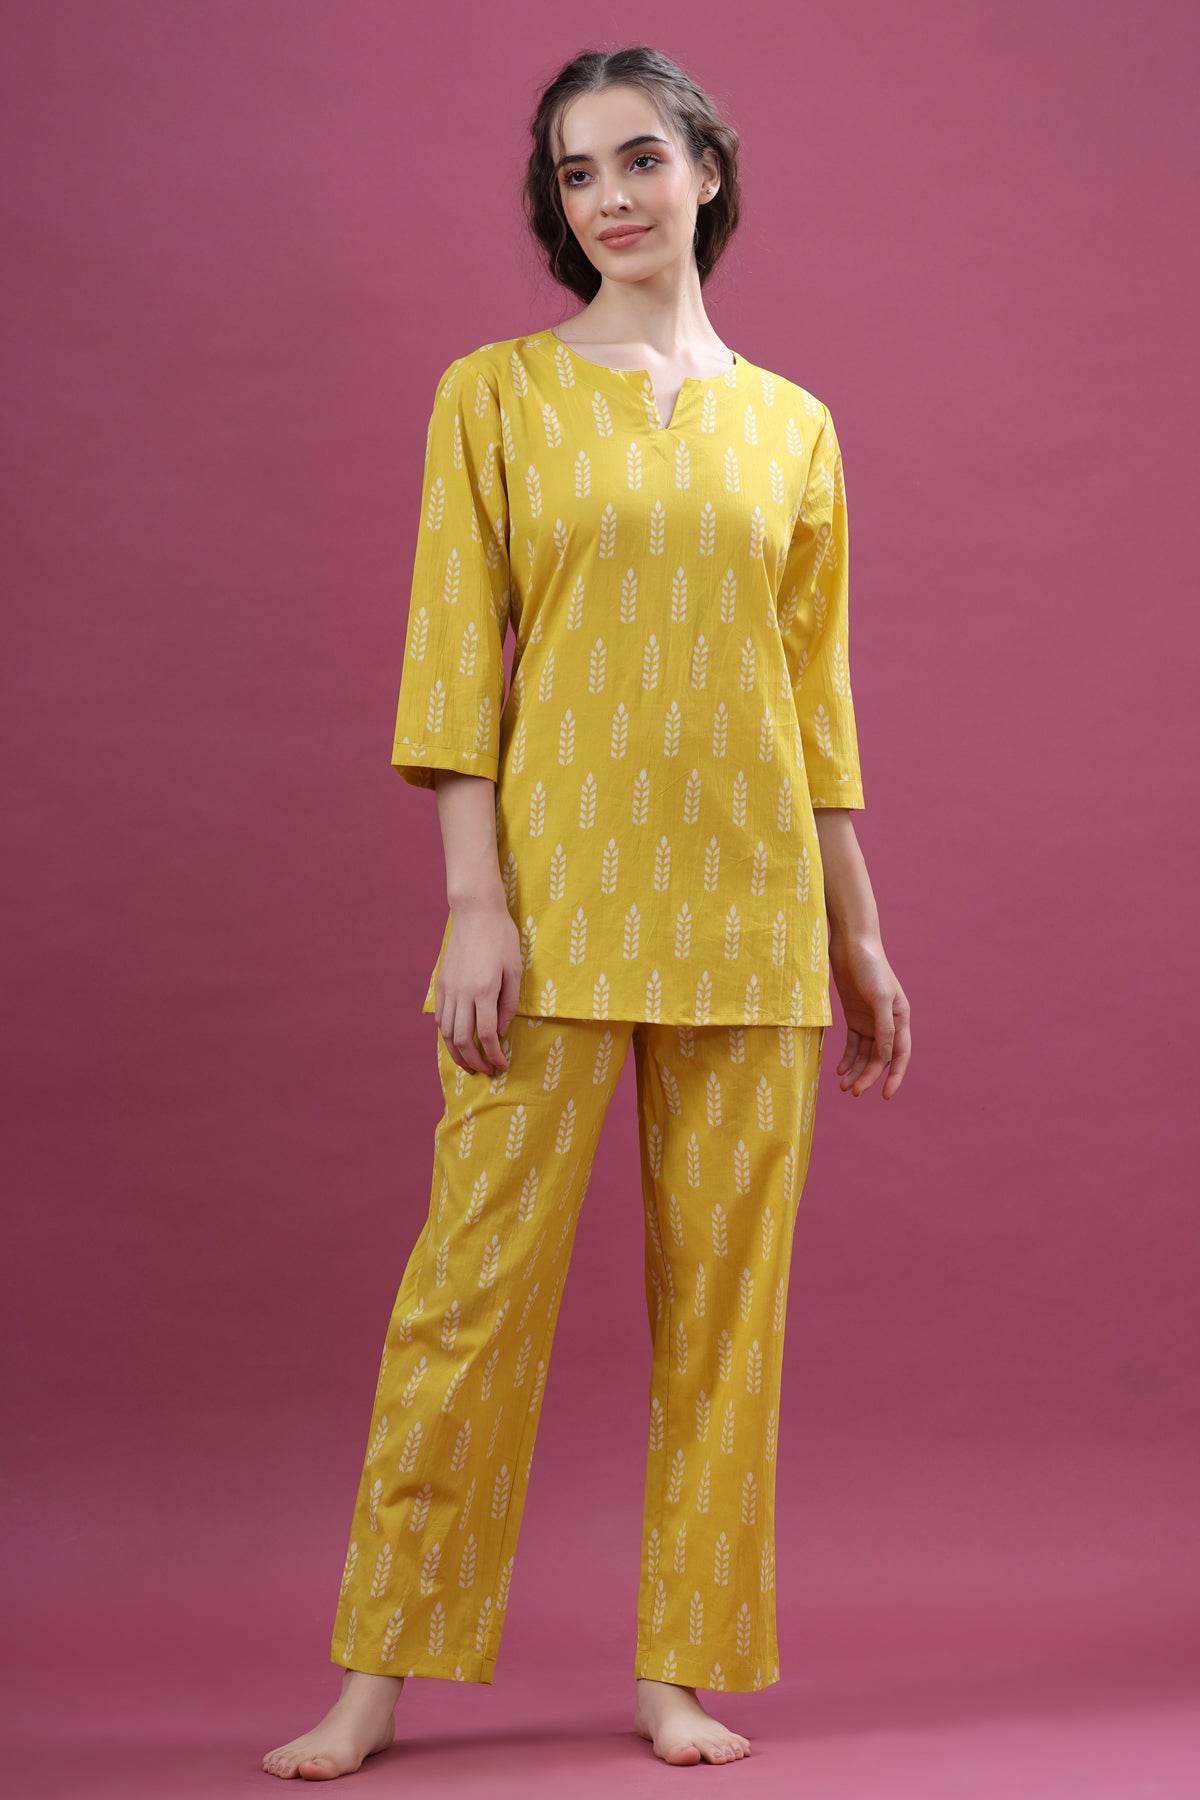 Minimalist Motif On Yellow Loungewear